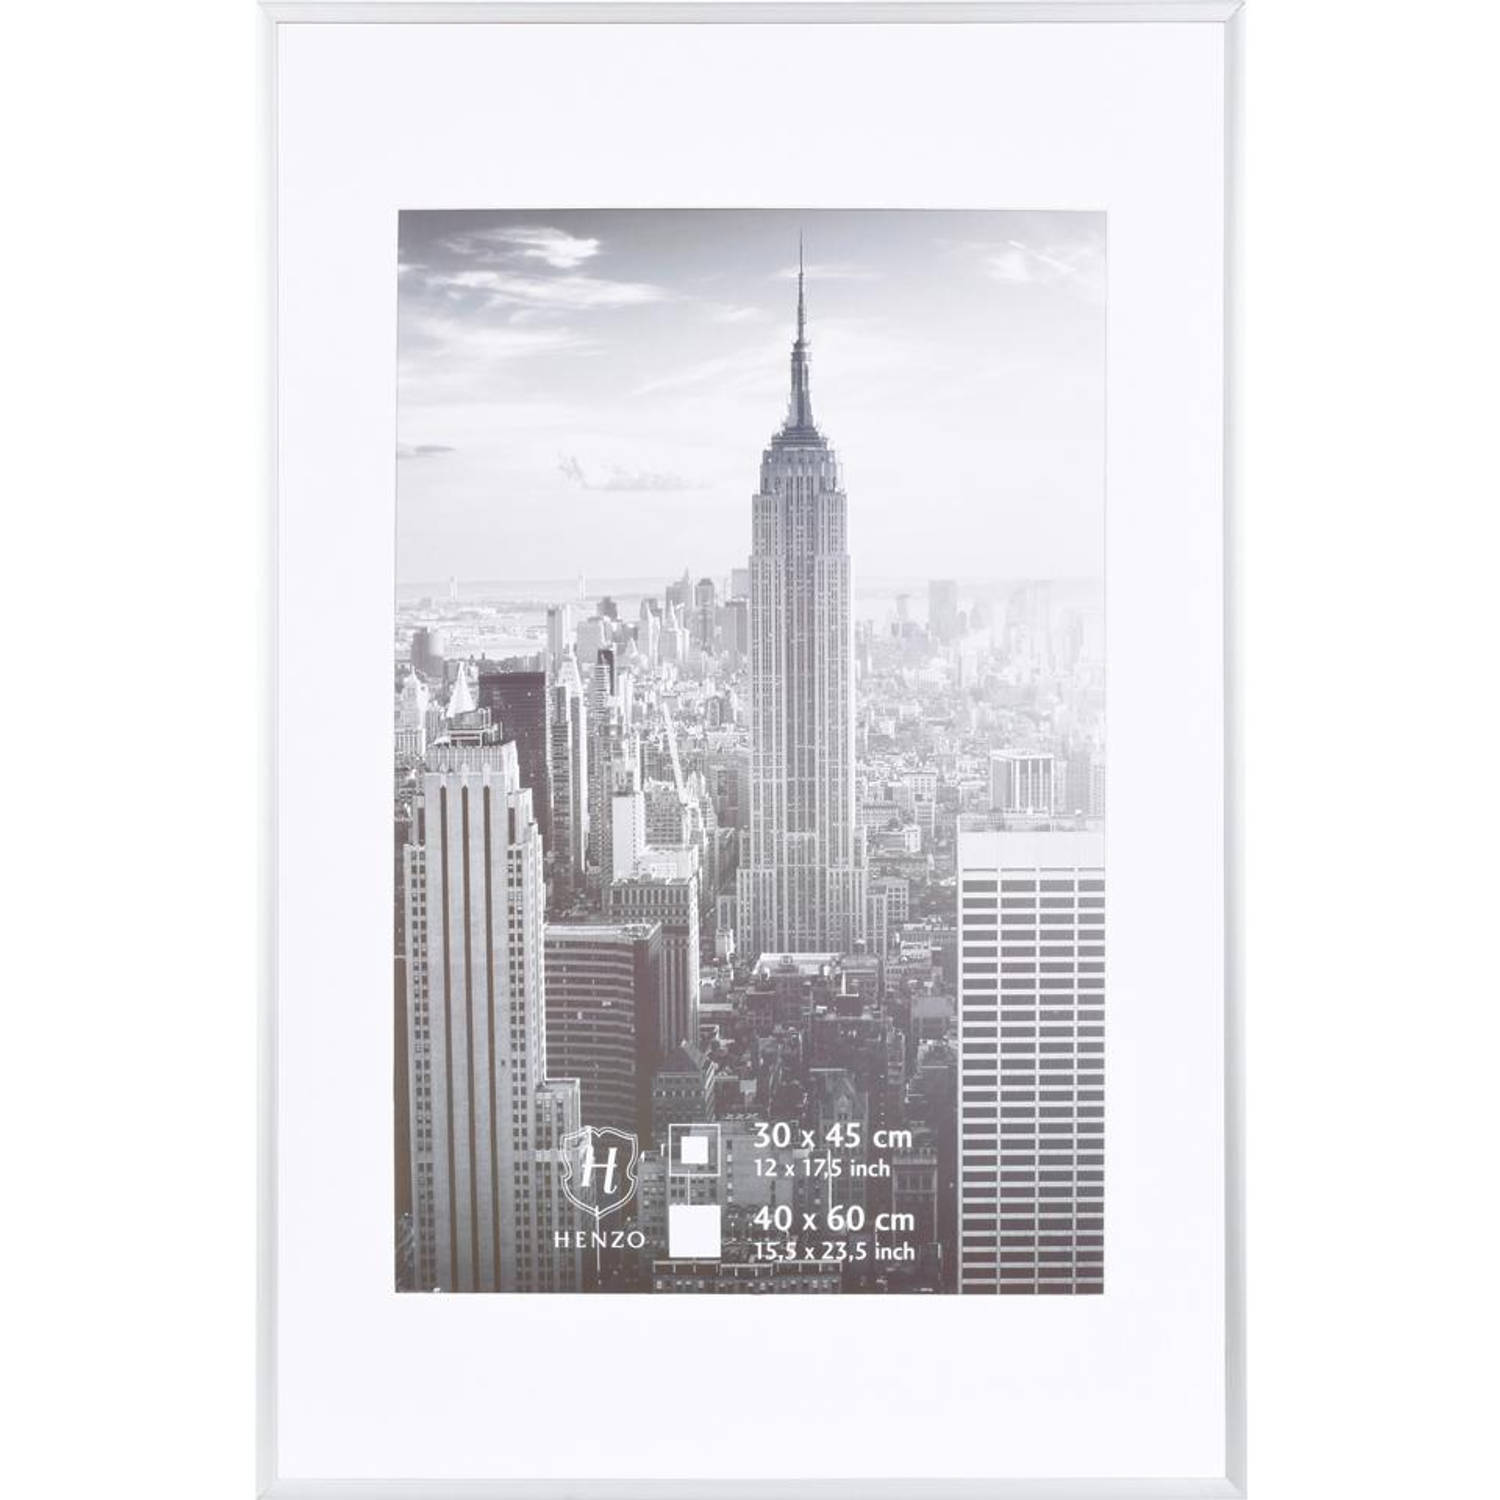 Henzo fotolijst Manhattan 40x60 cm zilver